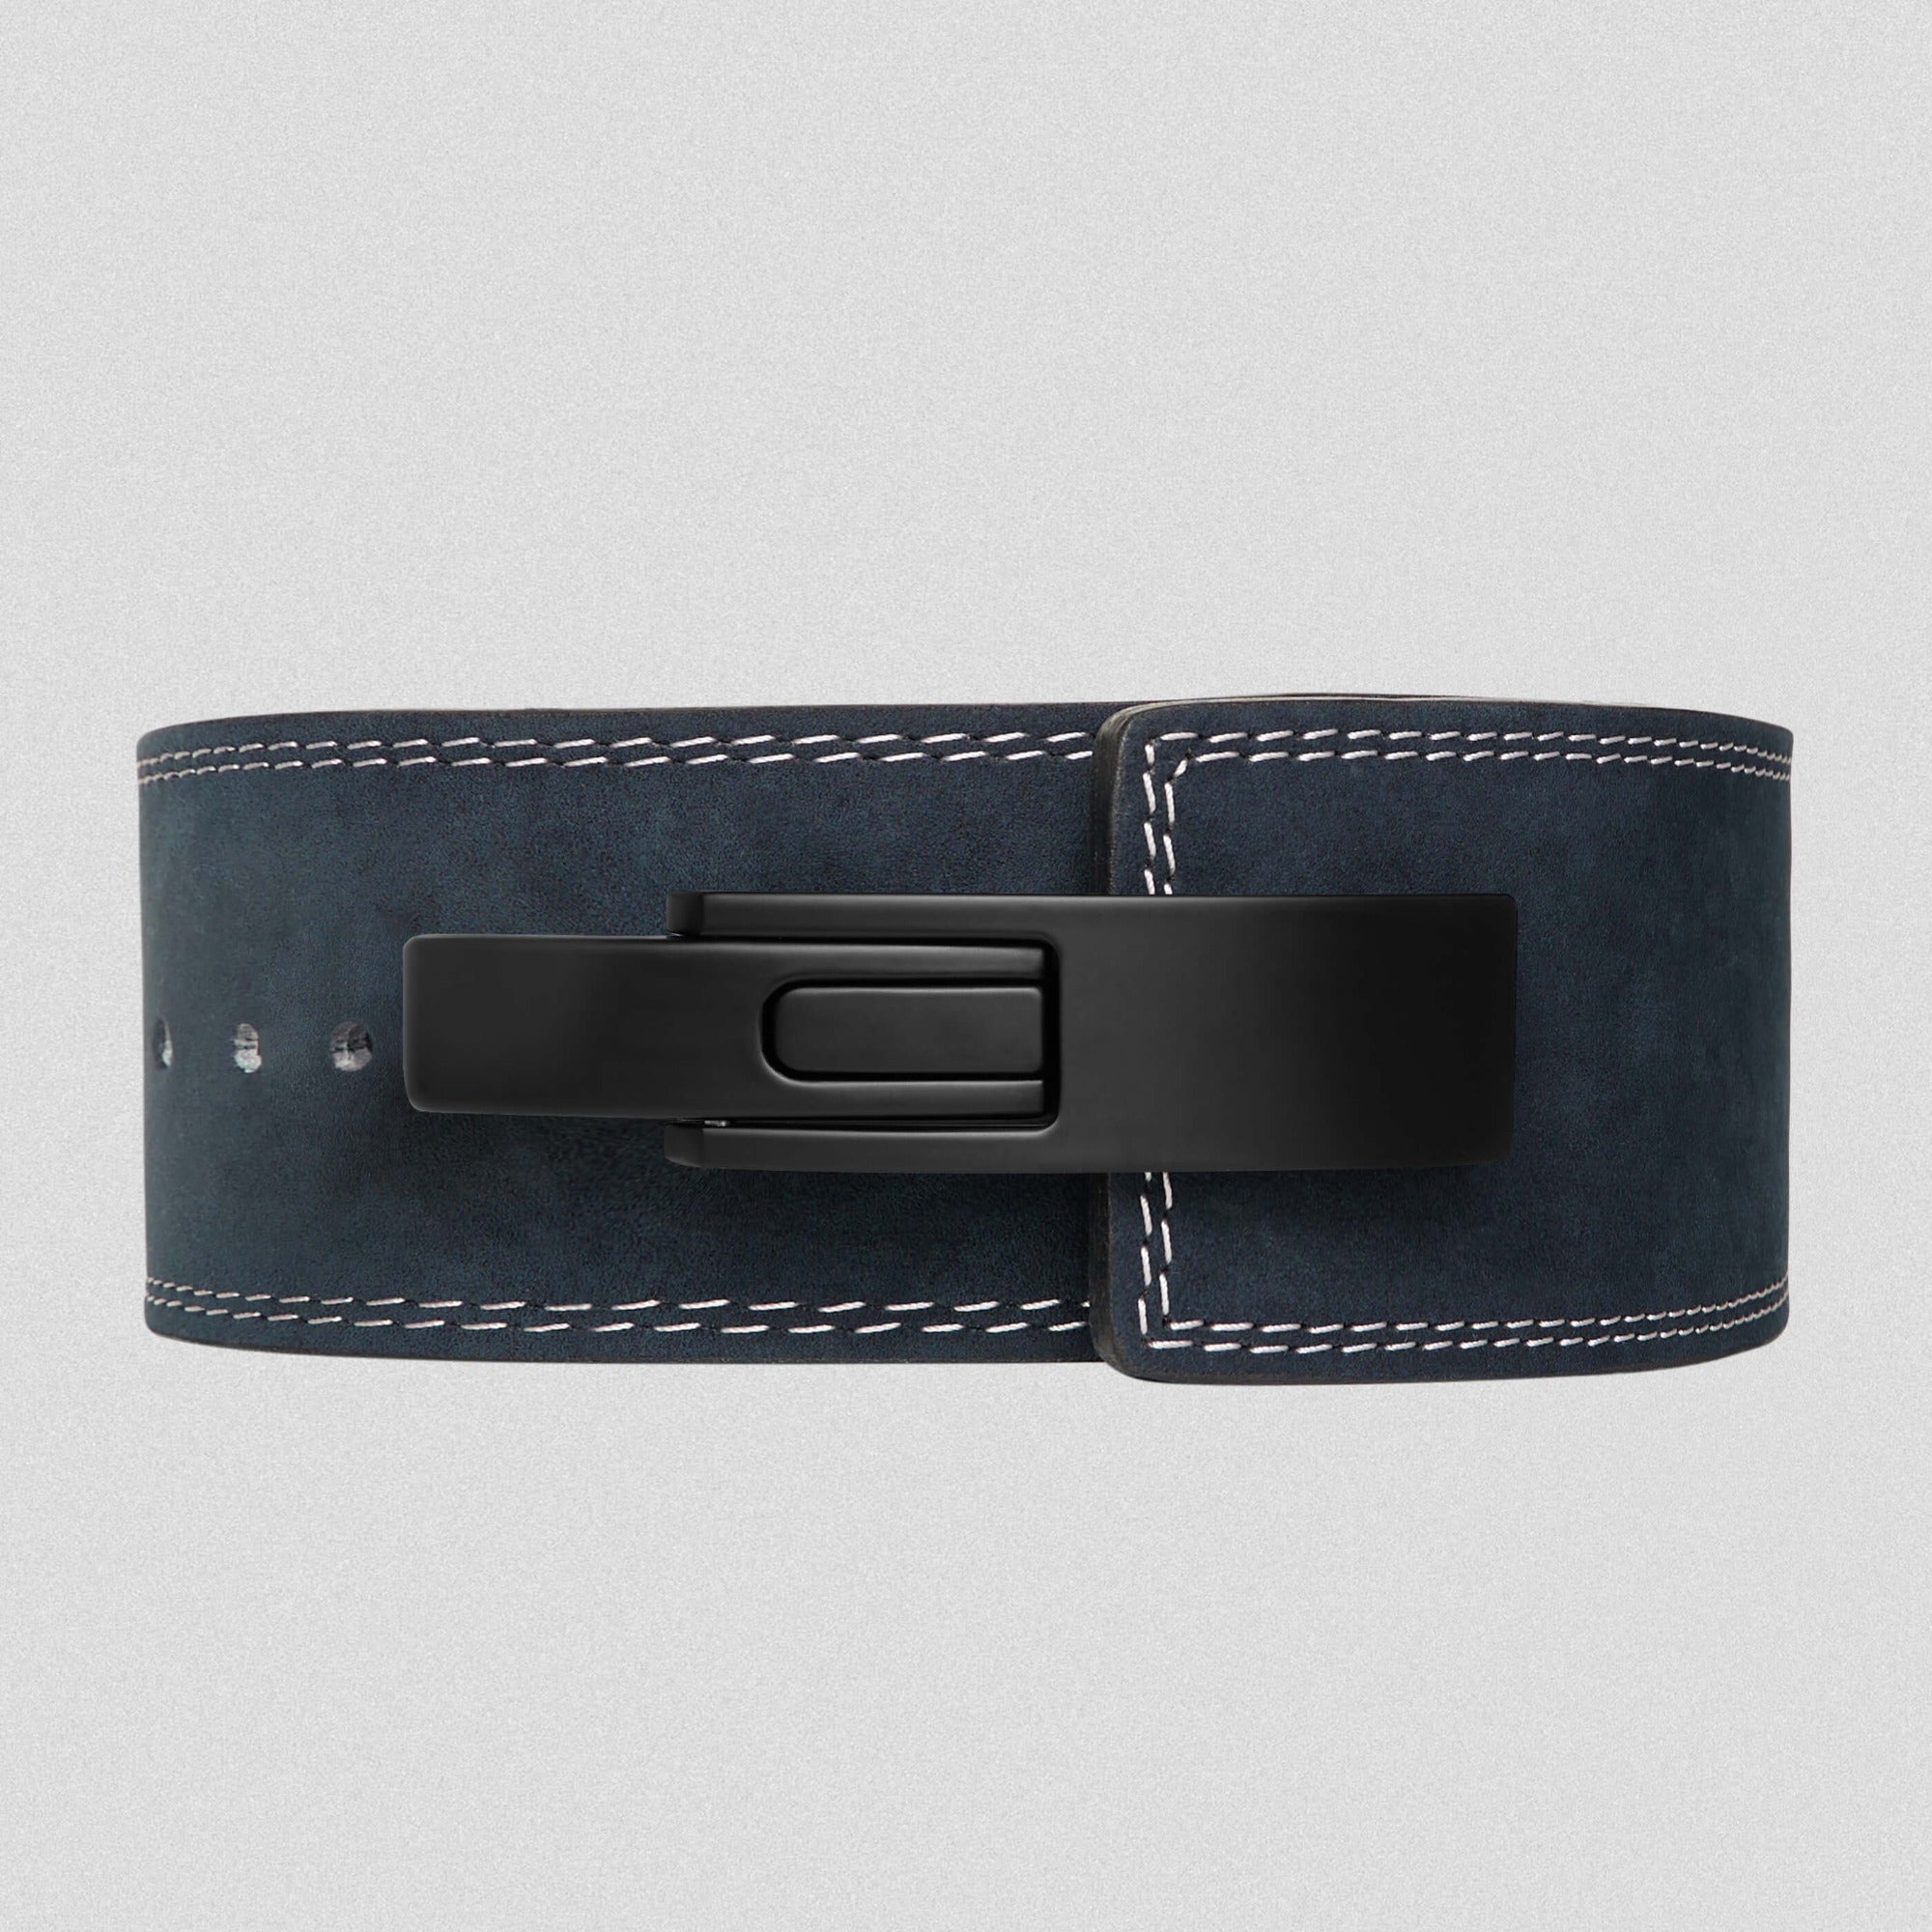 Gymreapers 10mm Lever Belt Black Medium Size Adjustable Weight